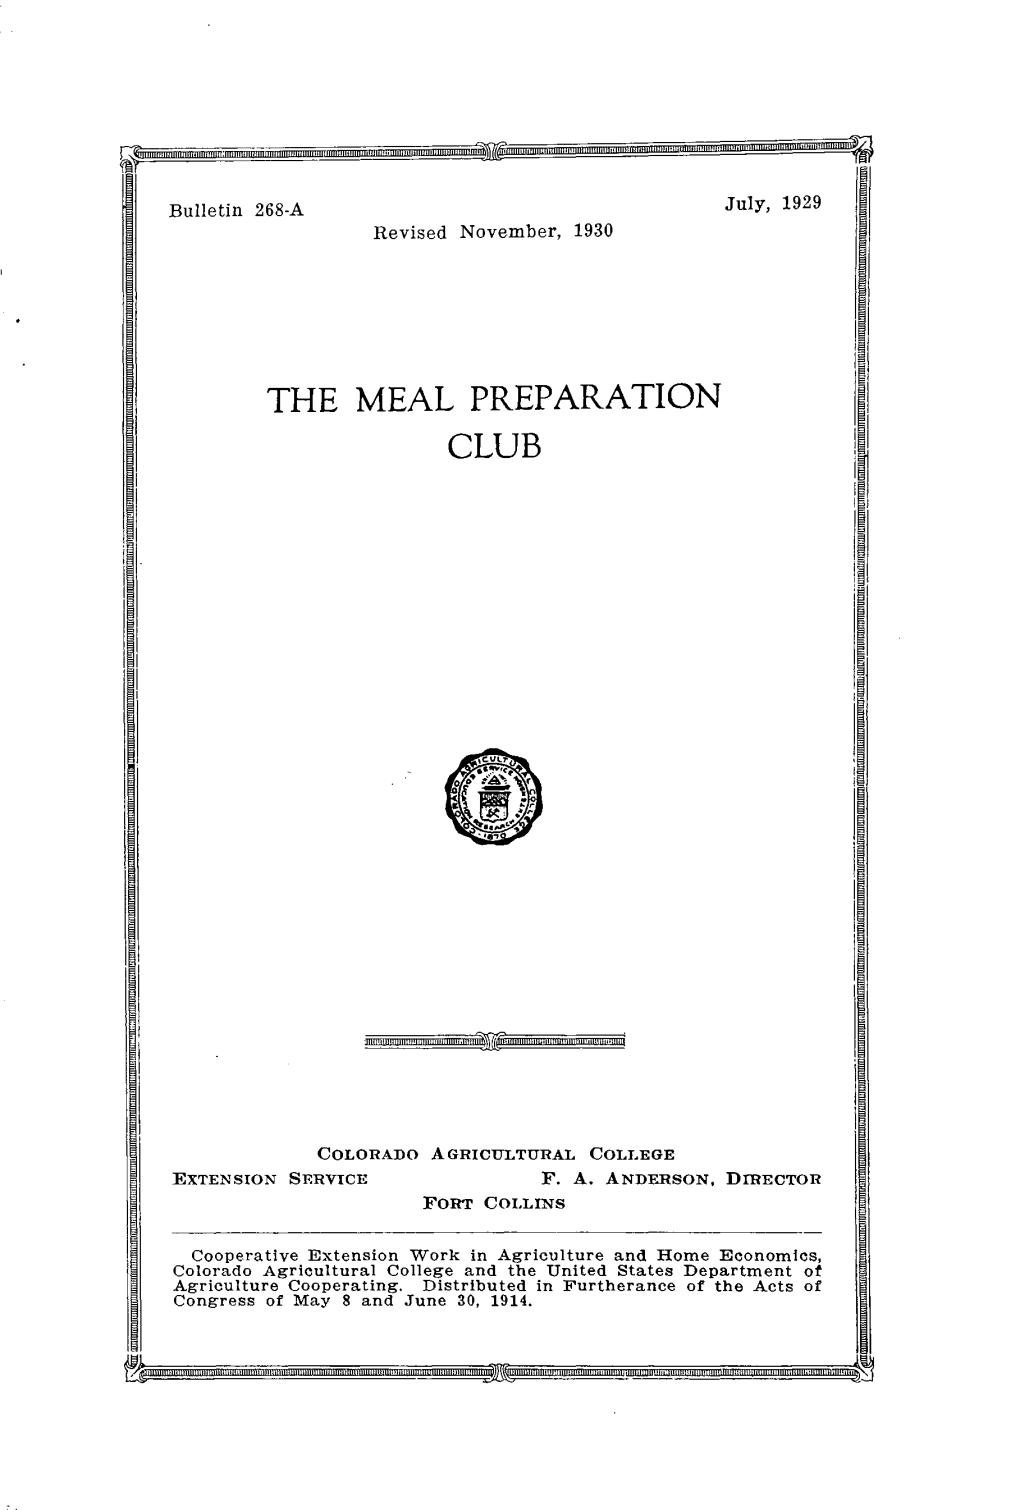 THE MEAL PREPARATION CLUB by MIRIAM J